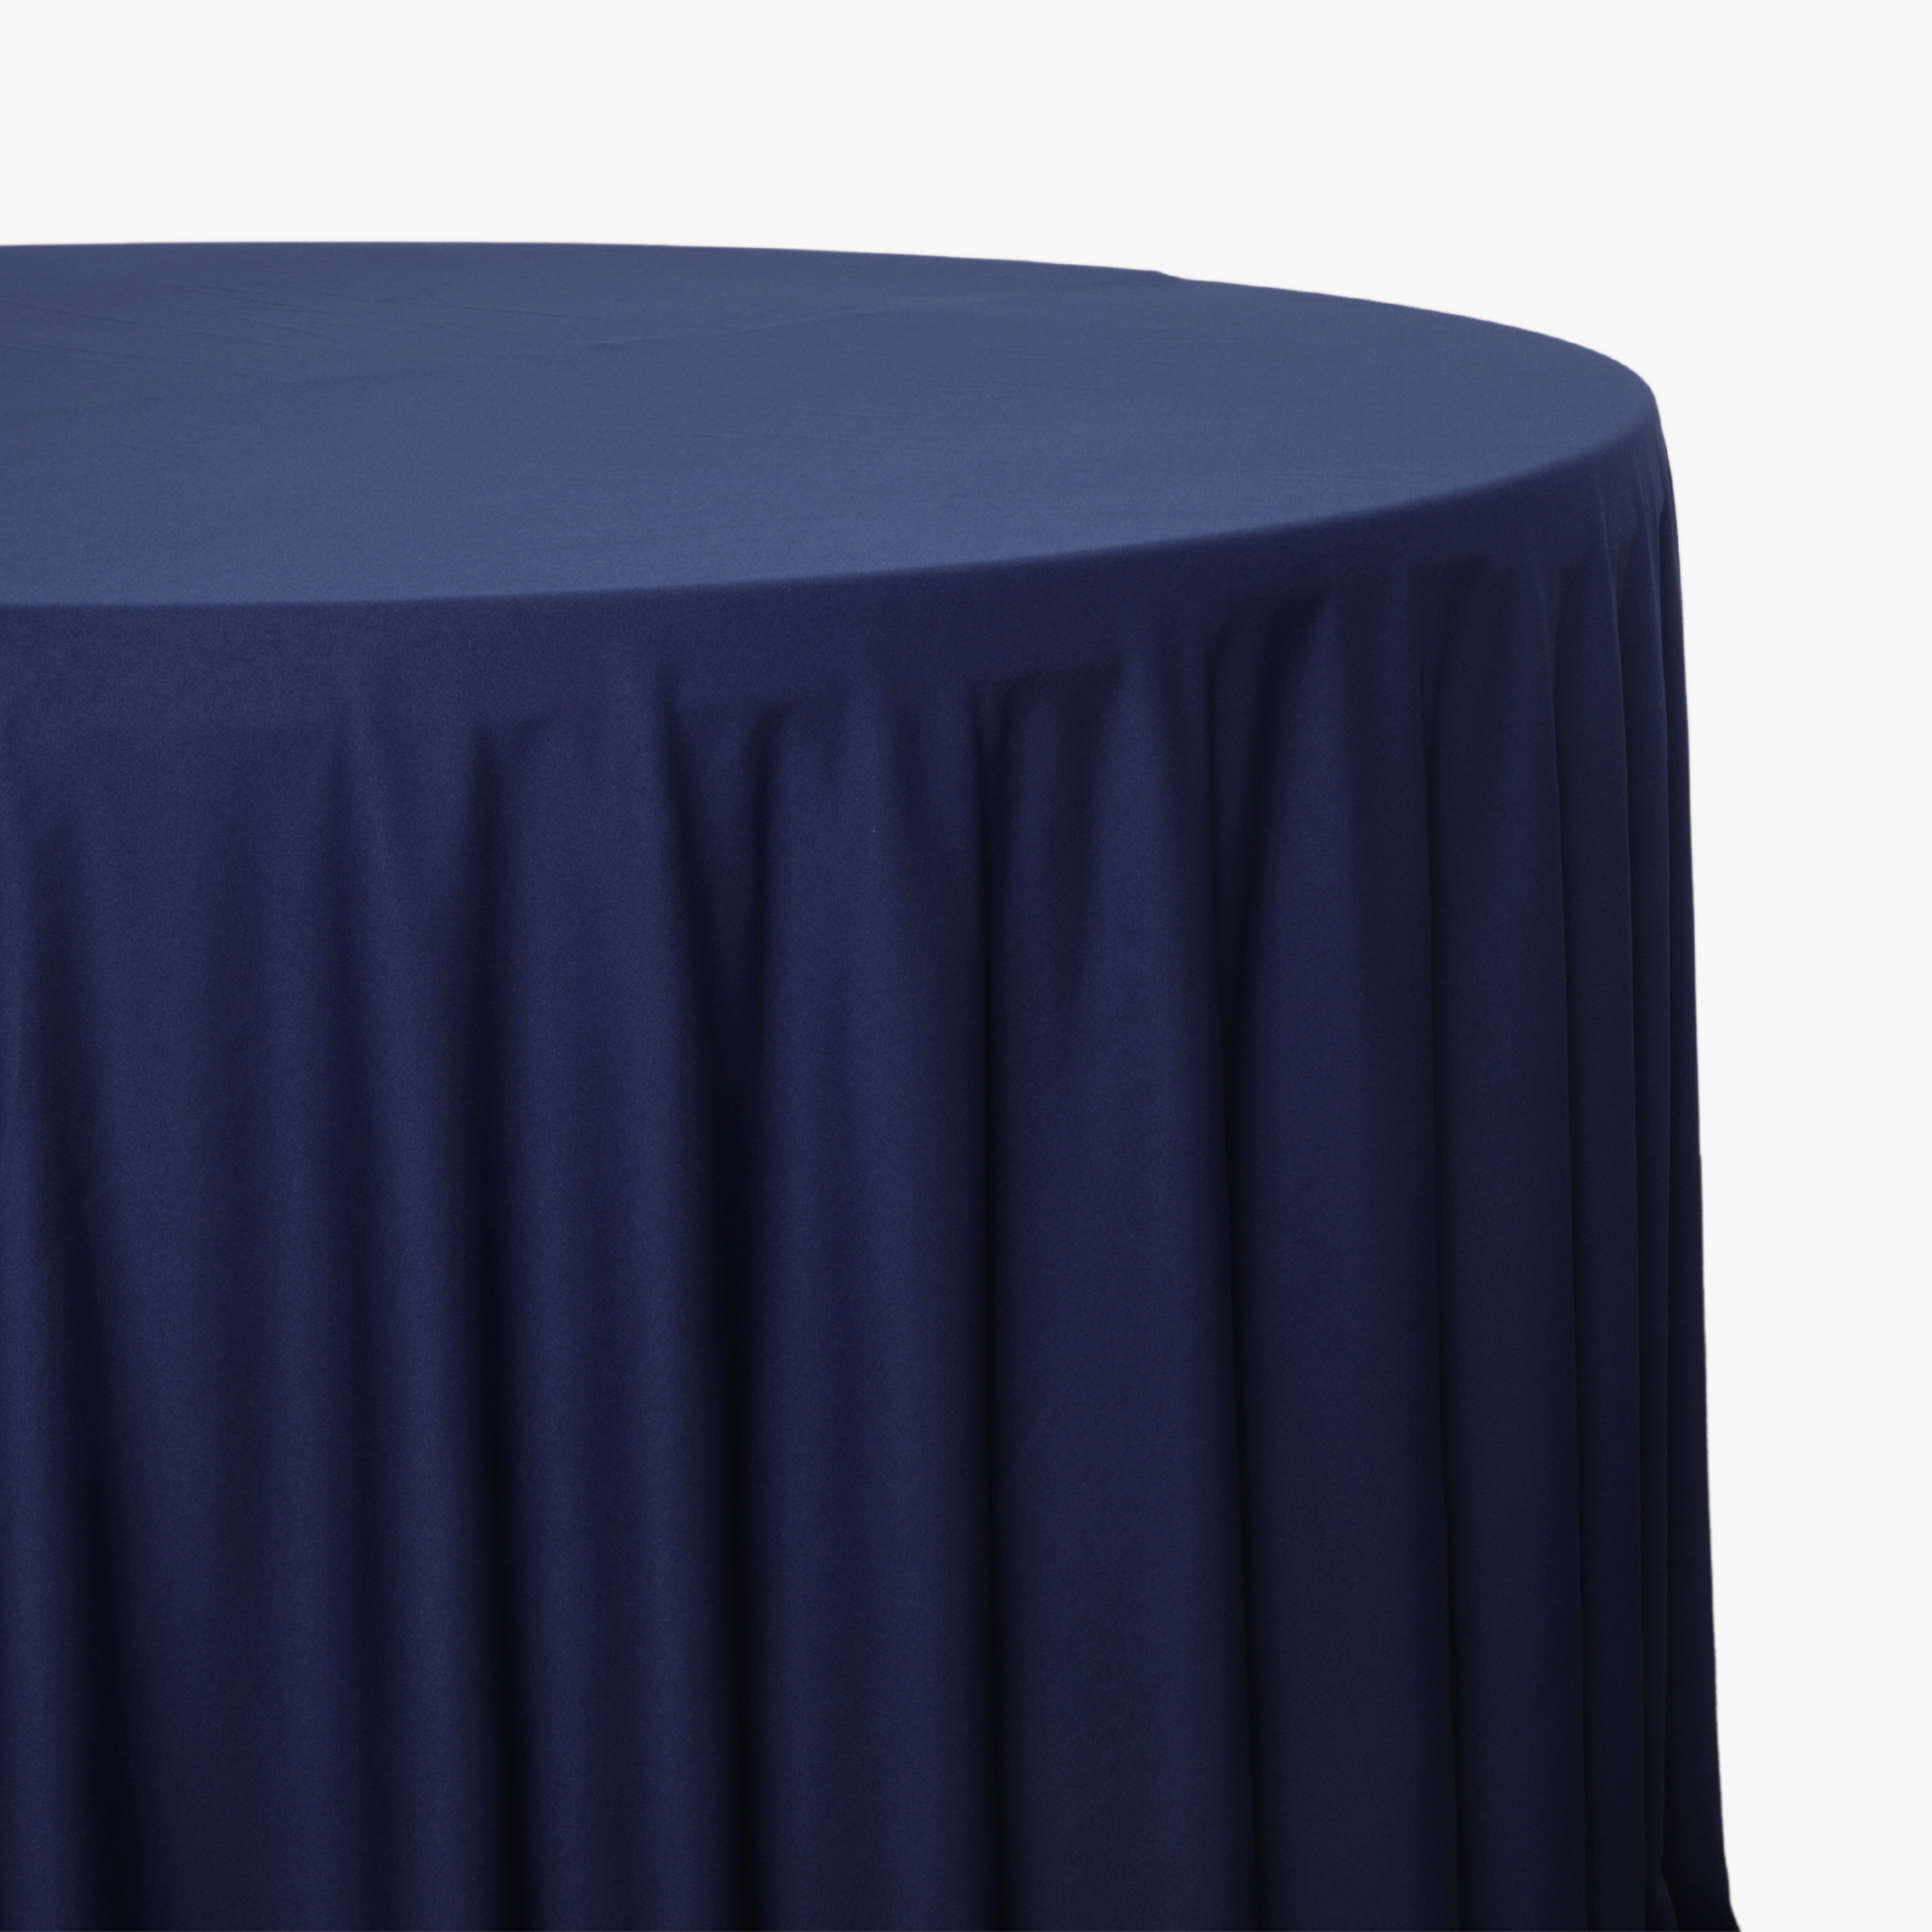 Scuba 108" Round Tablecloth - Navy Blue